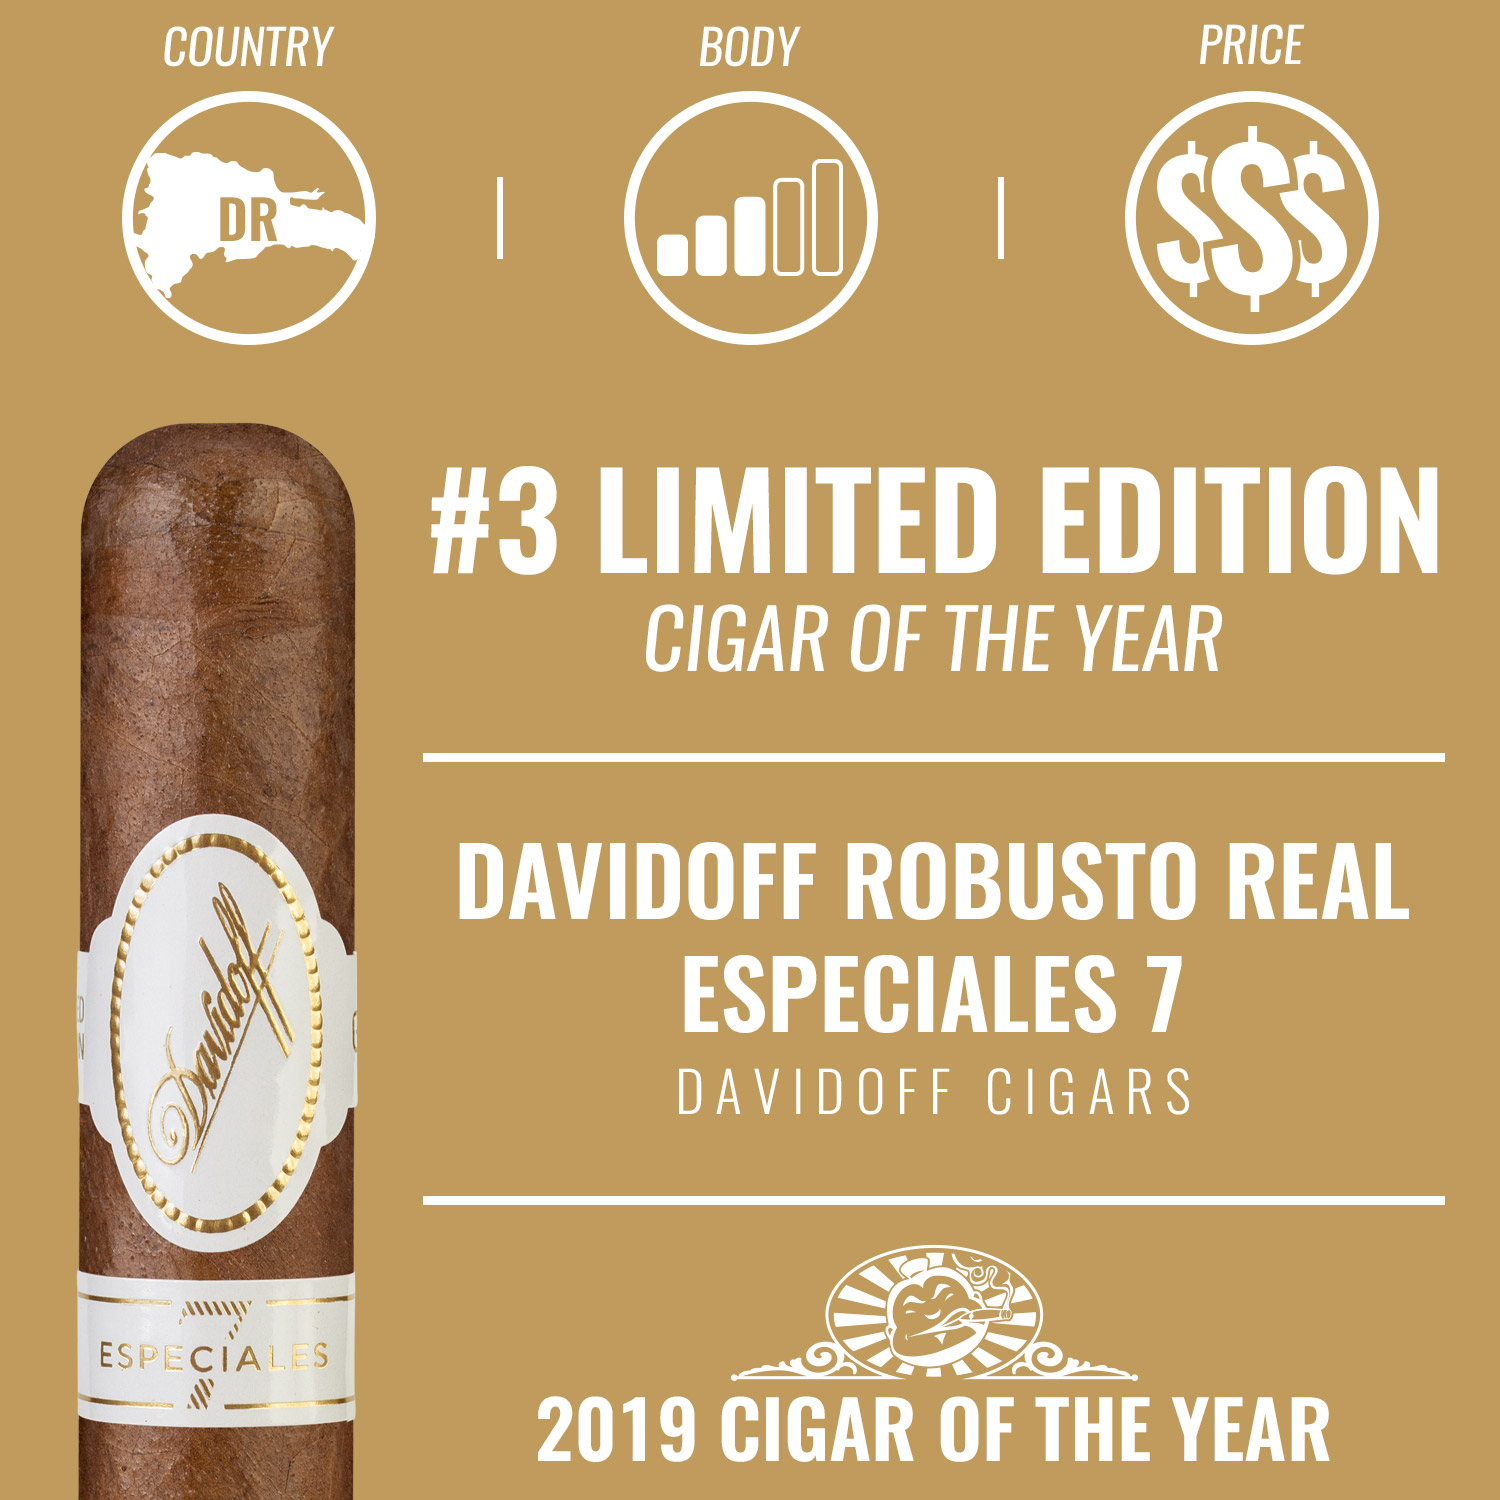 Davidoff Robusto Real Especiales 7 No. 3 Limited Edition Cigar of the Year 2019